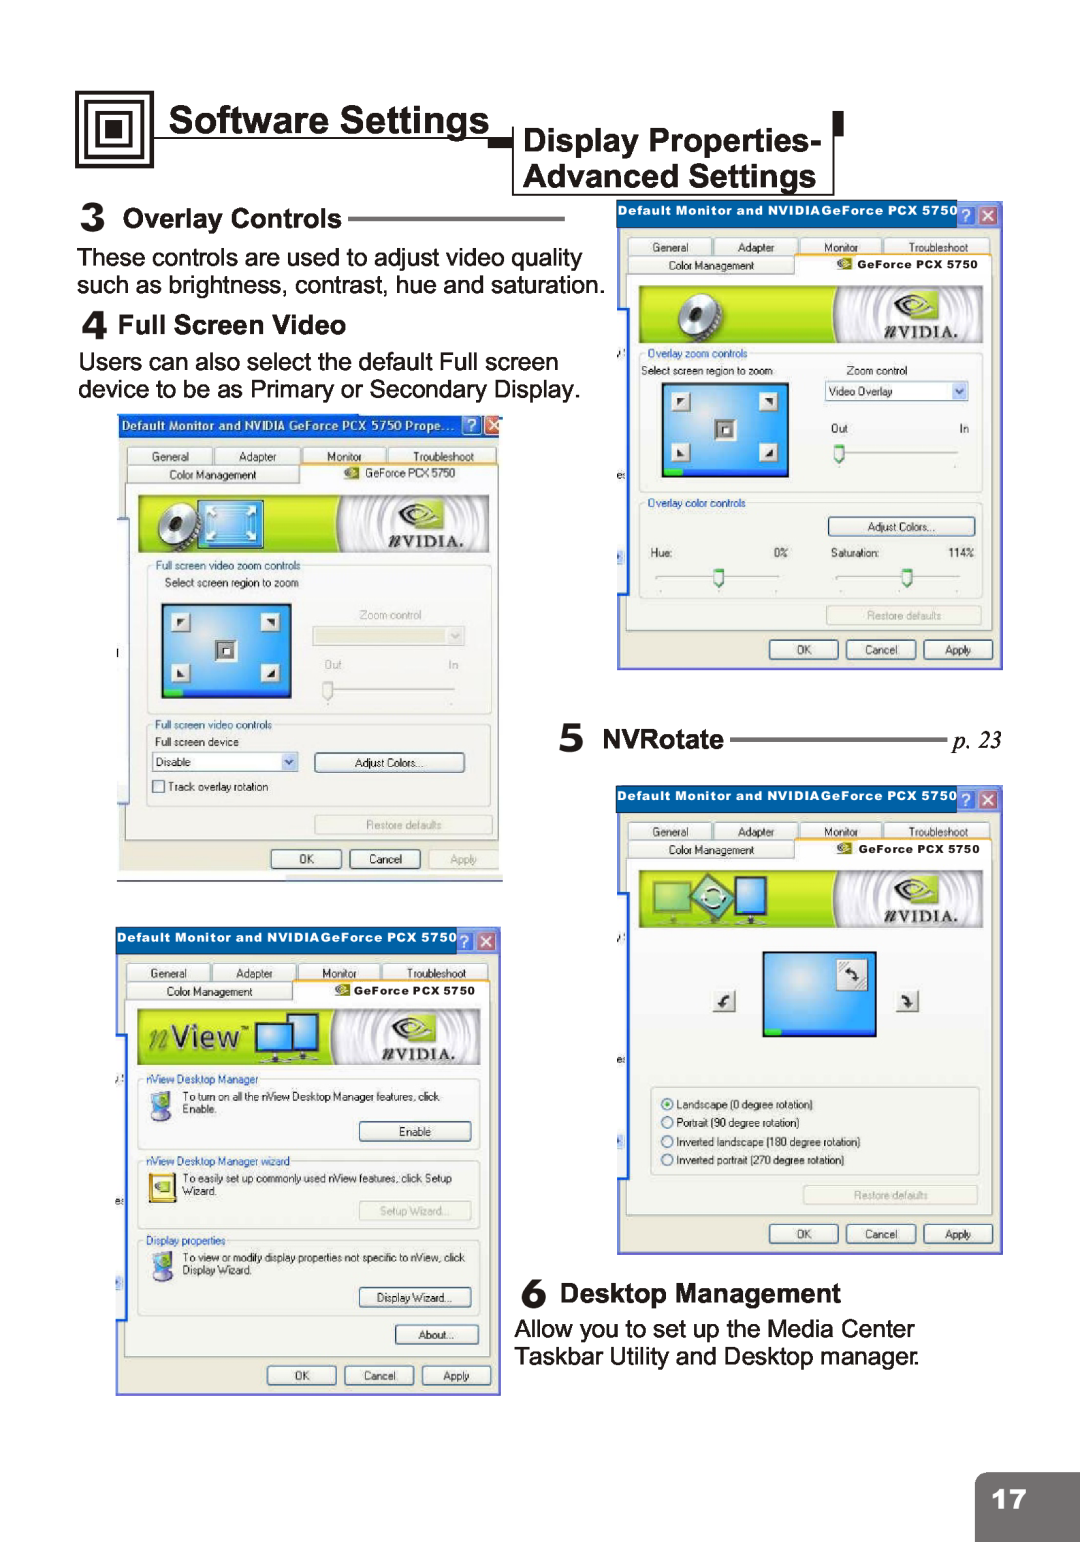 Nvidia PCI Express Series user manual Overlay Controls, Full Screen Video, NVRotate, Desktop Management, Software Settings 